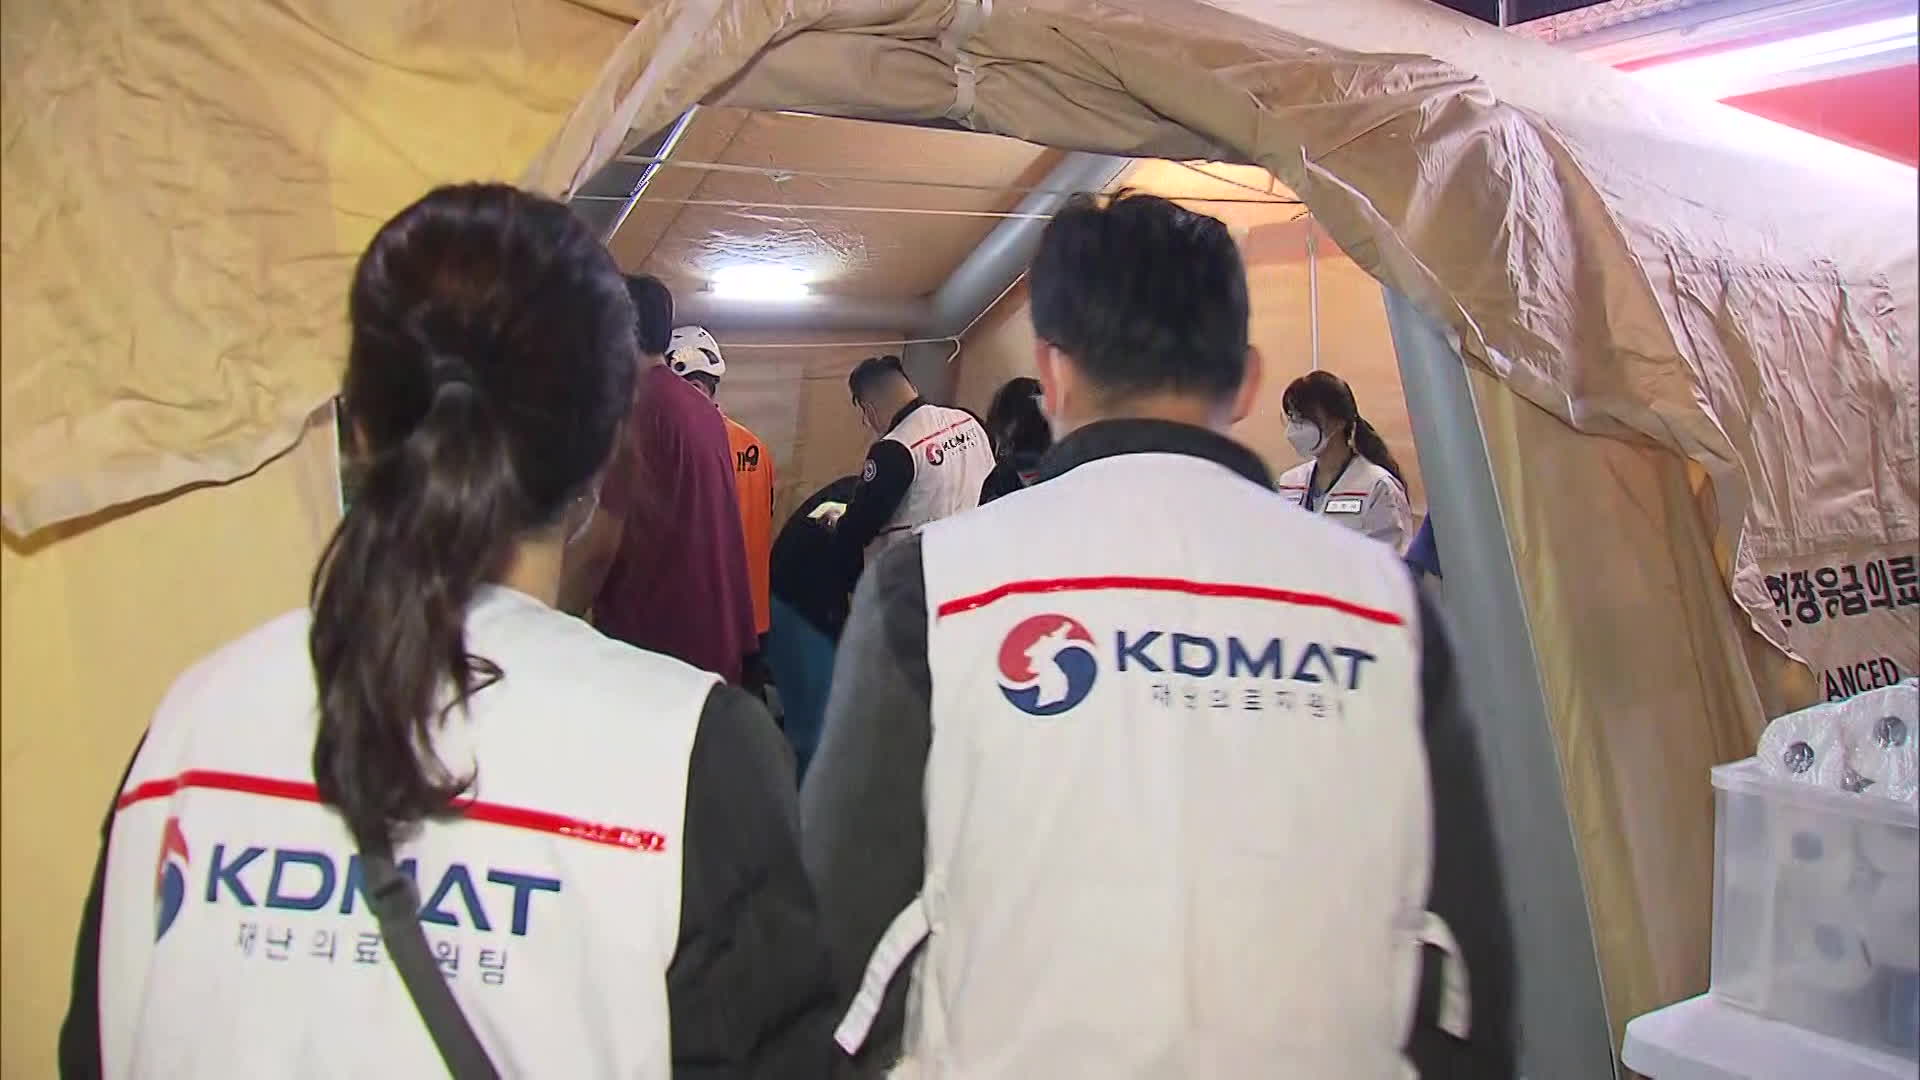 DMAT(Disaster Medical Assistance Team)은 초기 의료대응을 맡아 피해를 최소화하는 역할을 맡는다.